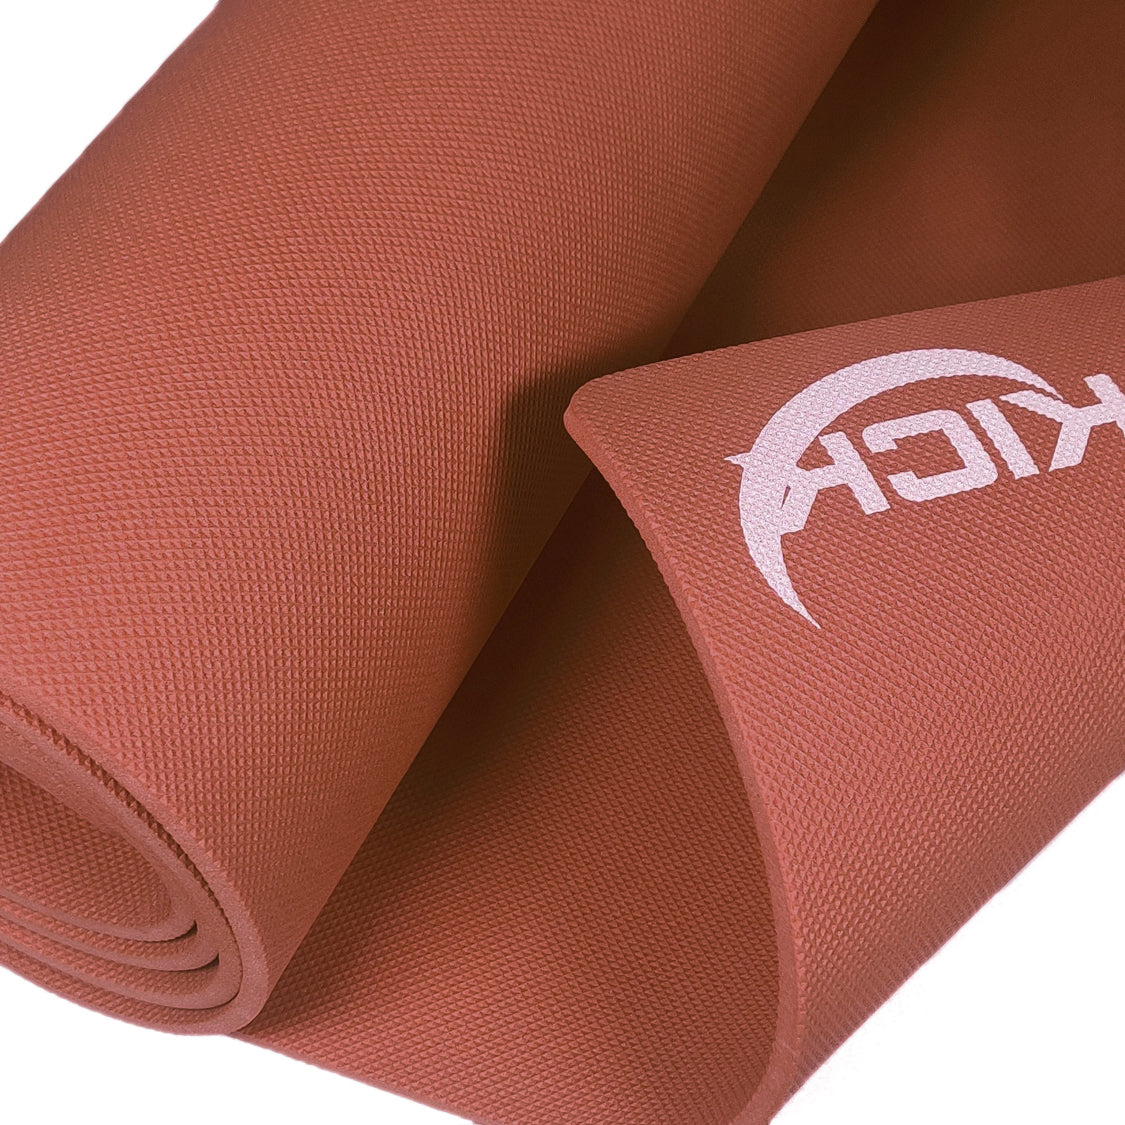 Spree Yoga Mat EVA 4mm Thick Dampproof Anti-slip Anti-Tear